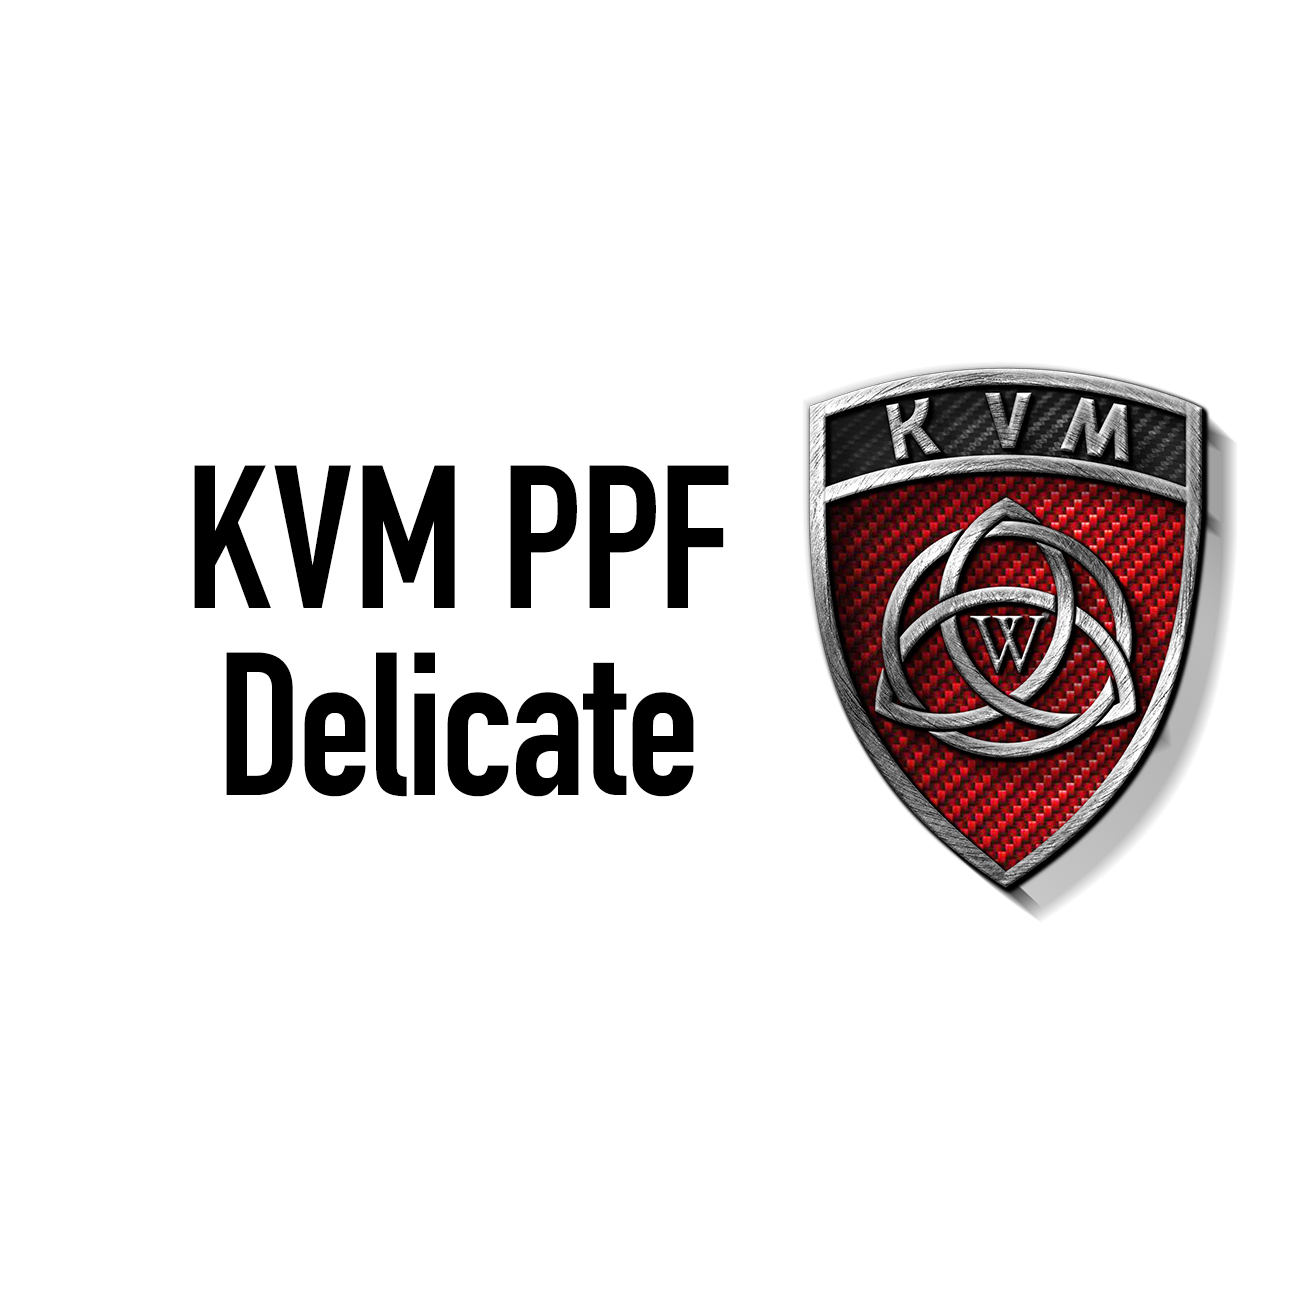 Пленка KVM PPF Delicate 0.61